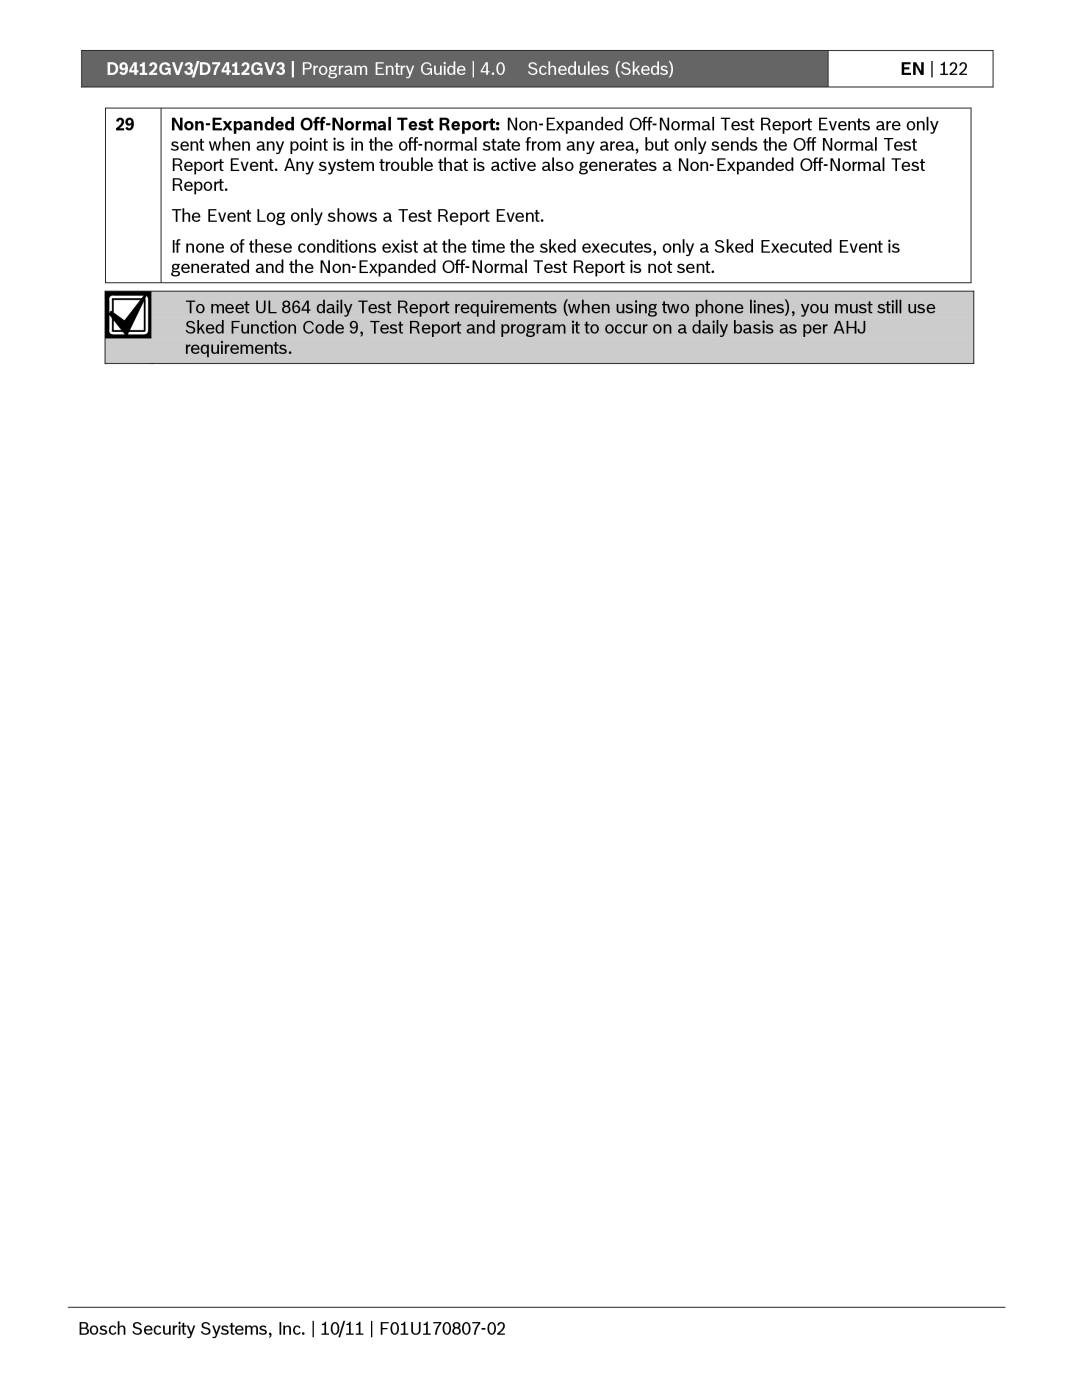 Bosch Appliances manual D9412GV3/D7412GV3 Program Entry Guide 4.0 Schedules Skeds 